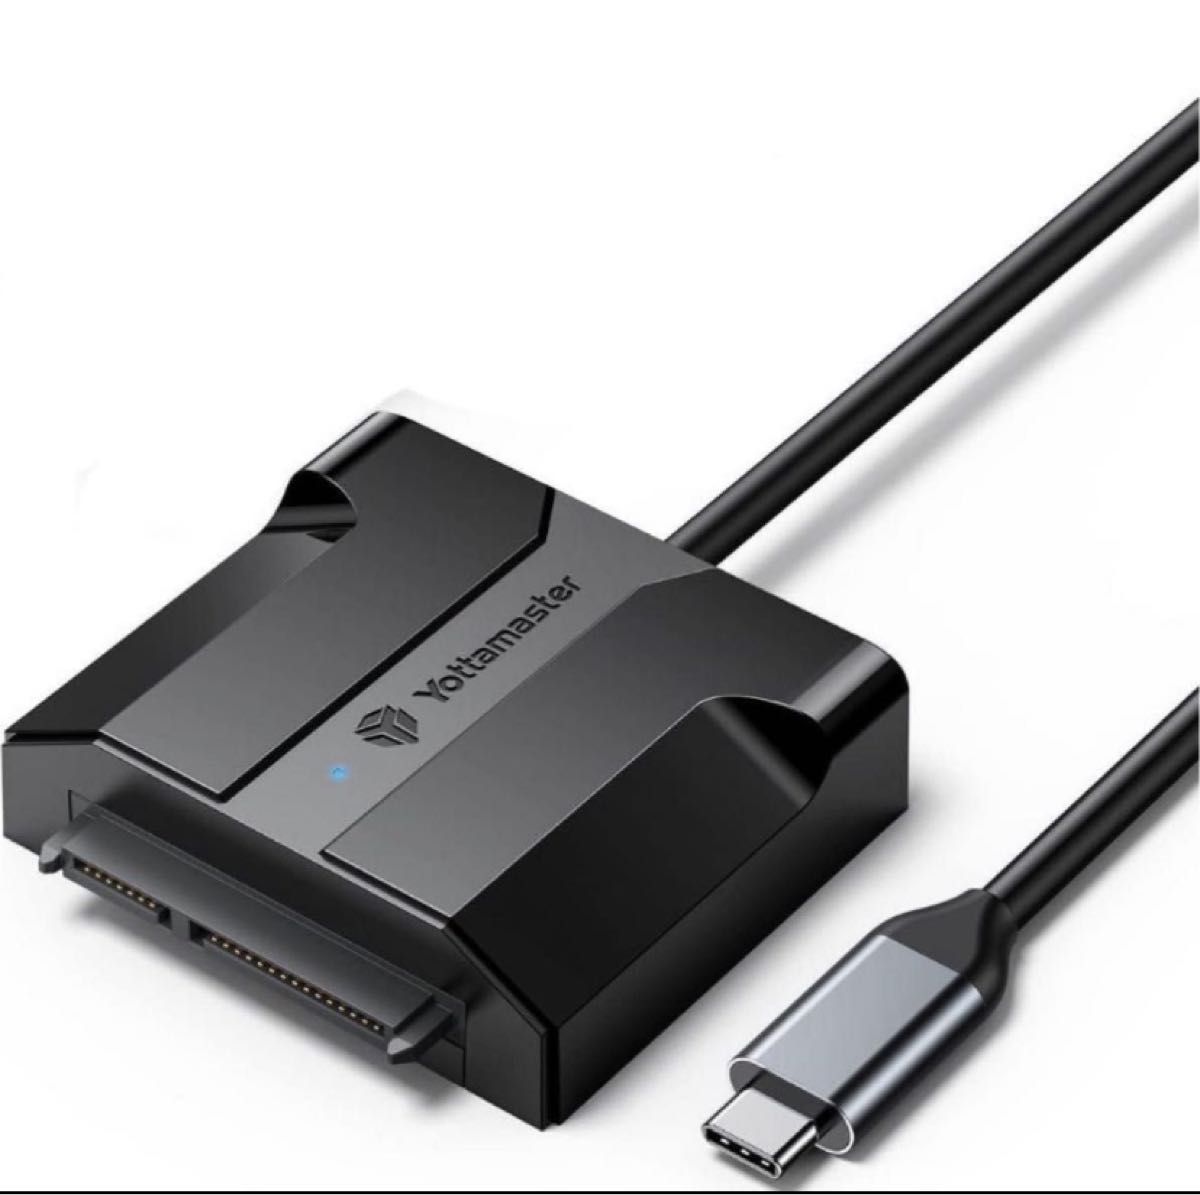 Yottamaster SATA USB 変換アダプター 5Gbps高速転送速度